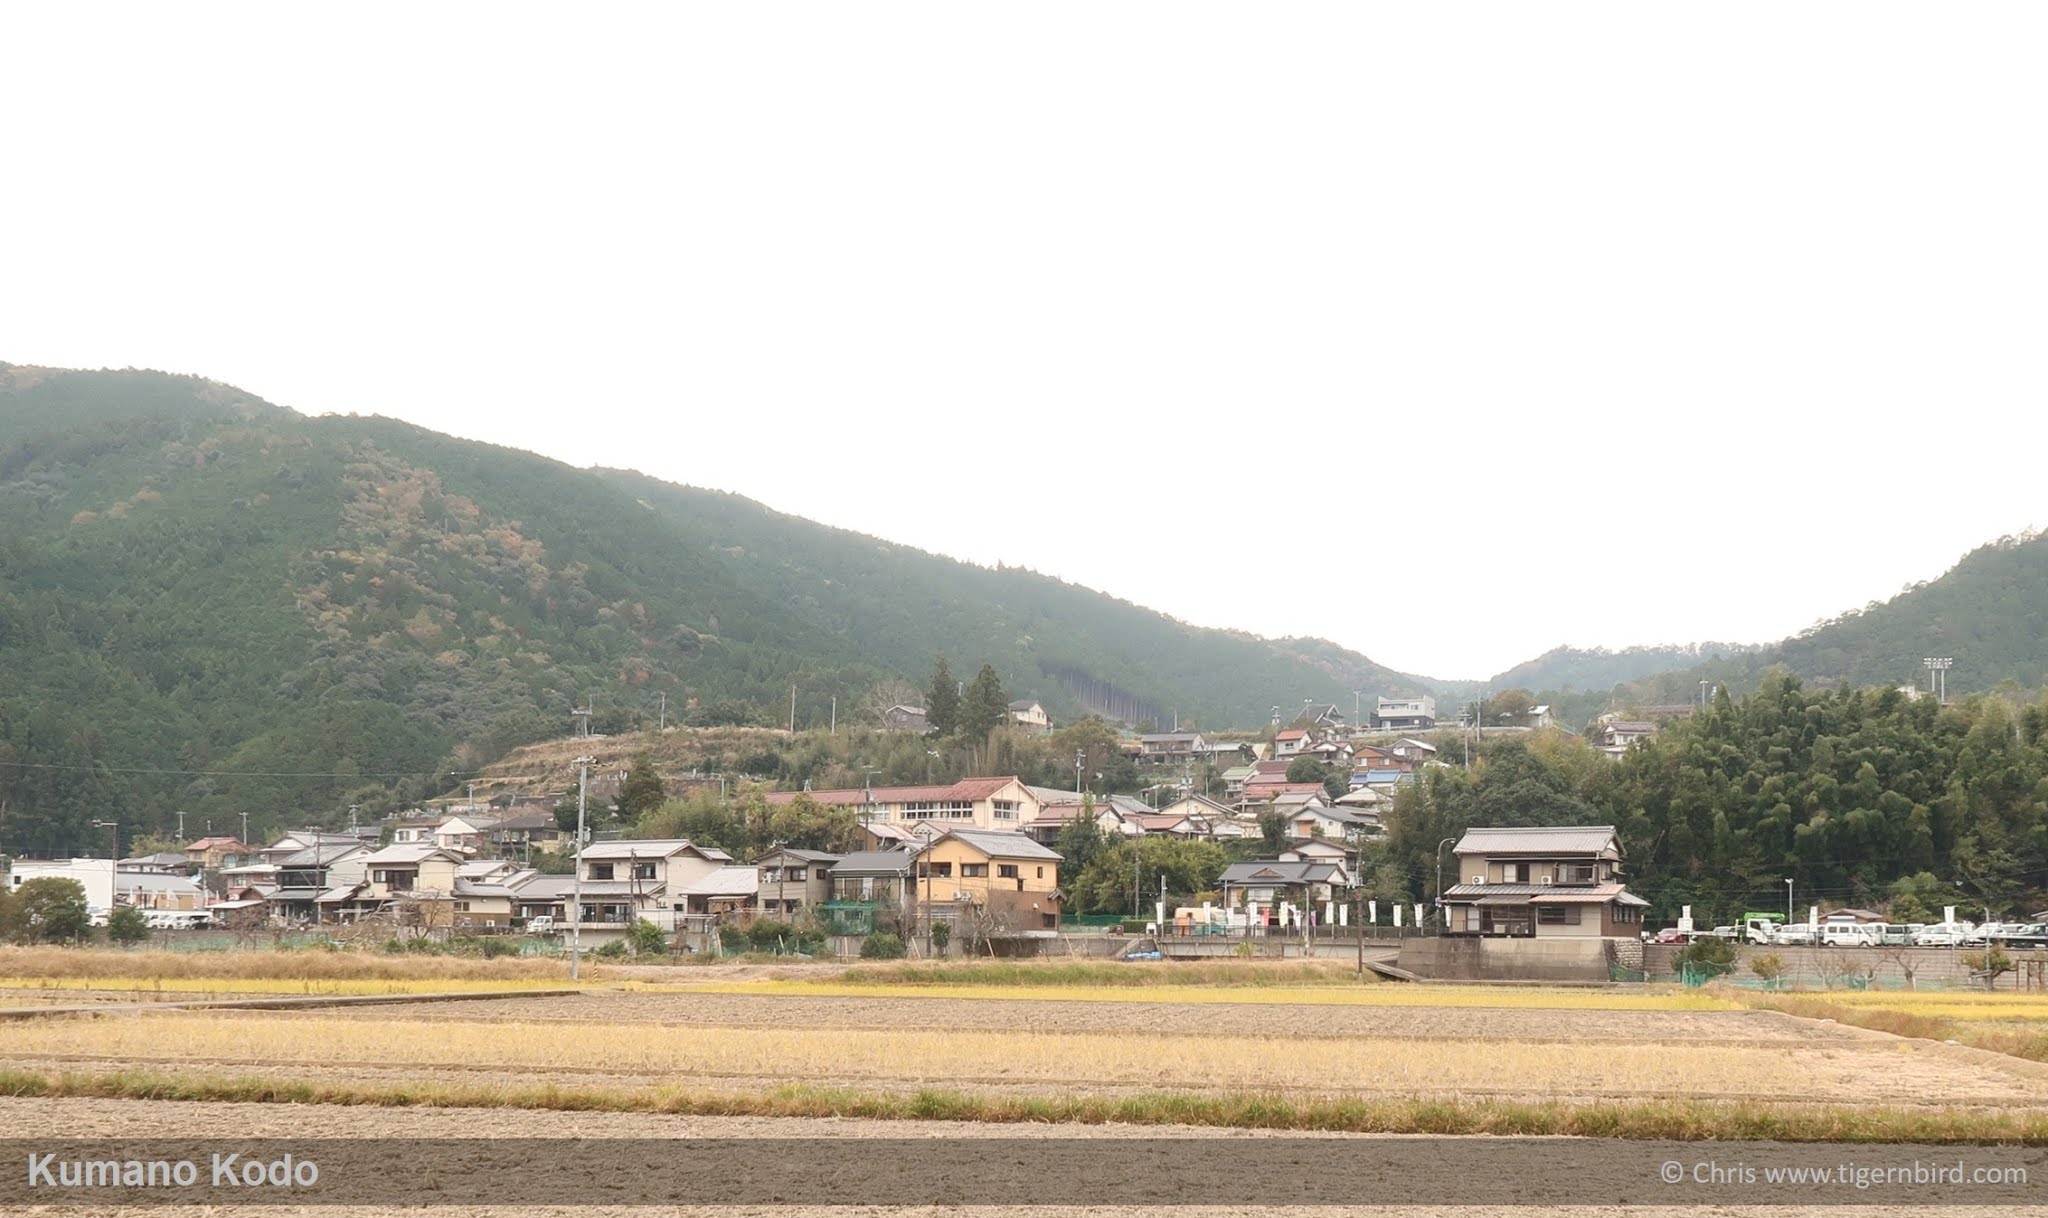 Small village against hillside in Kumano, Japan